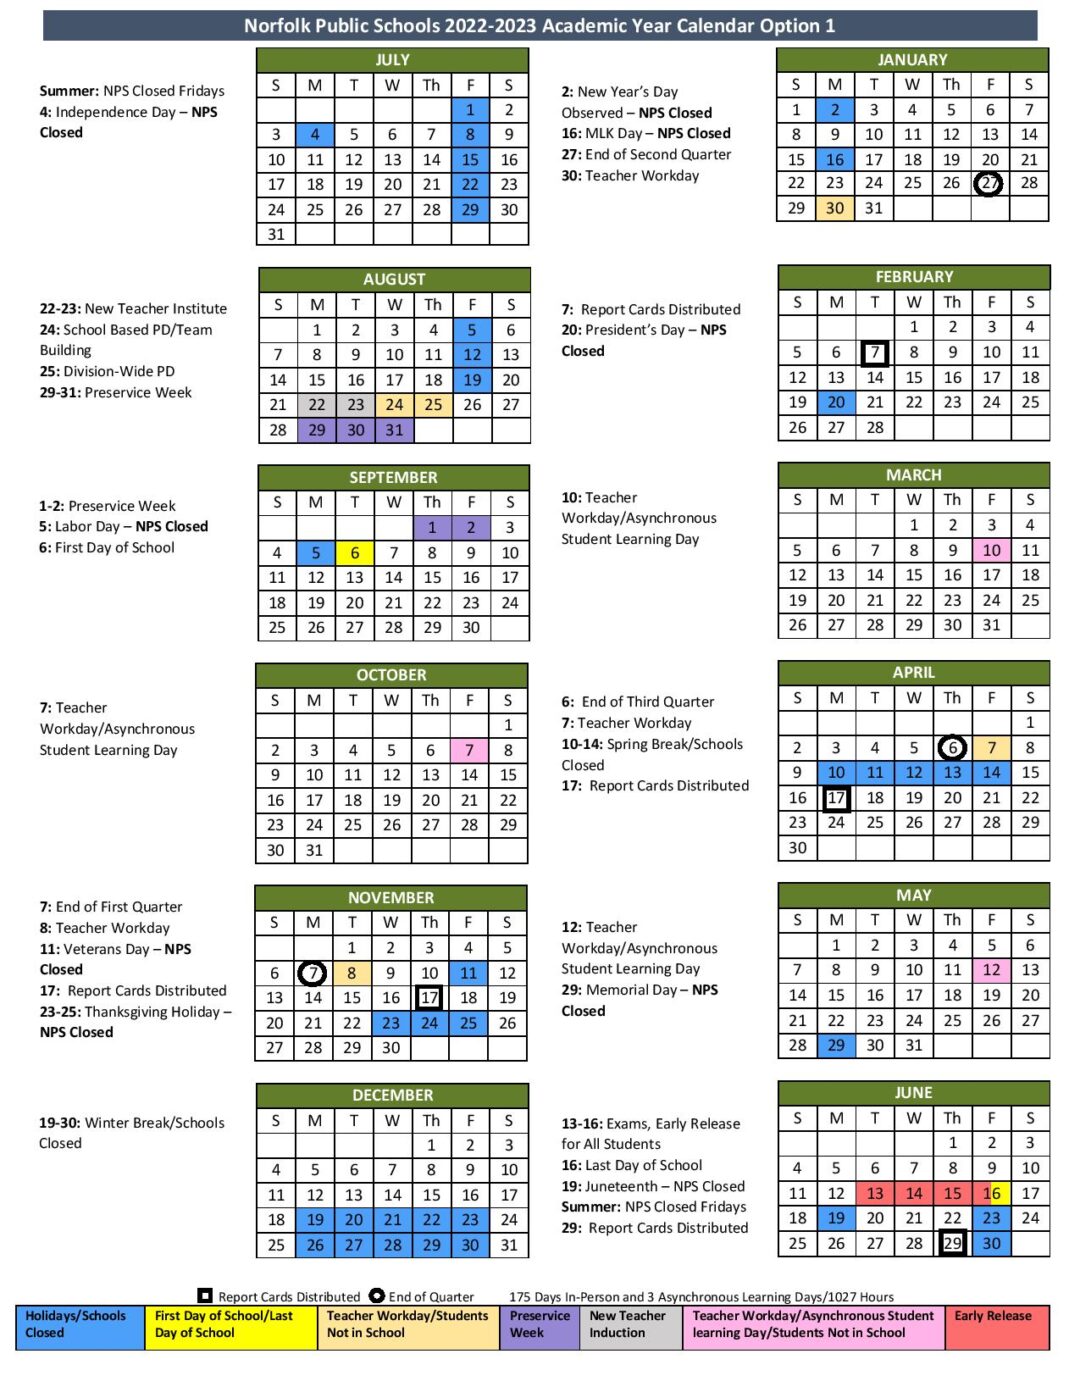 norfolk-public-schools-calendar-2022-2023-in-pdf